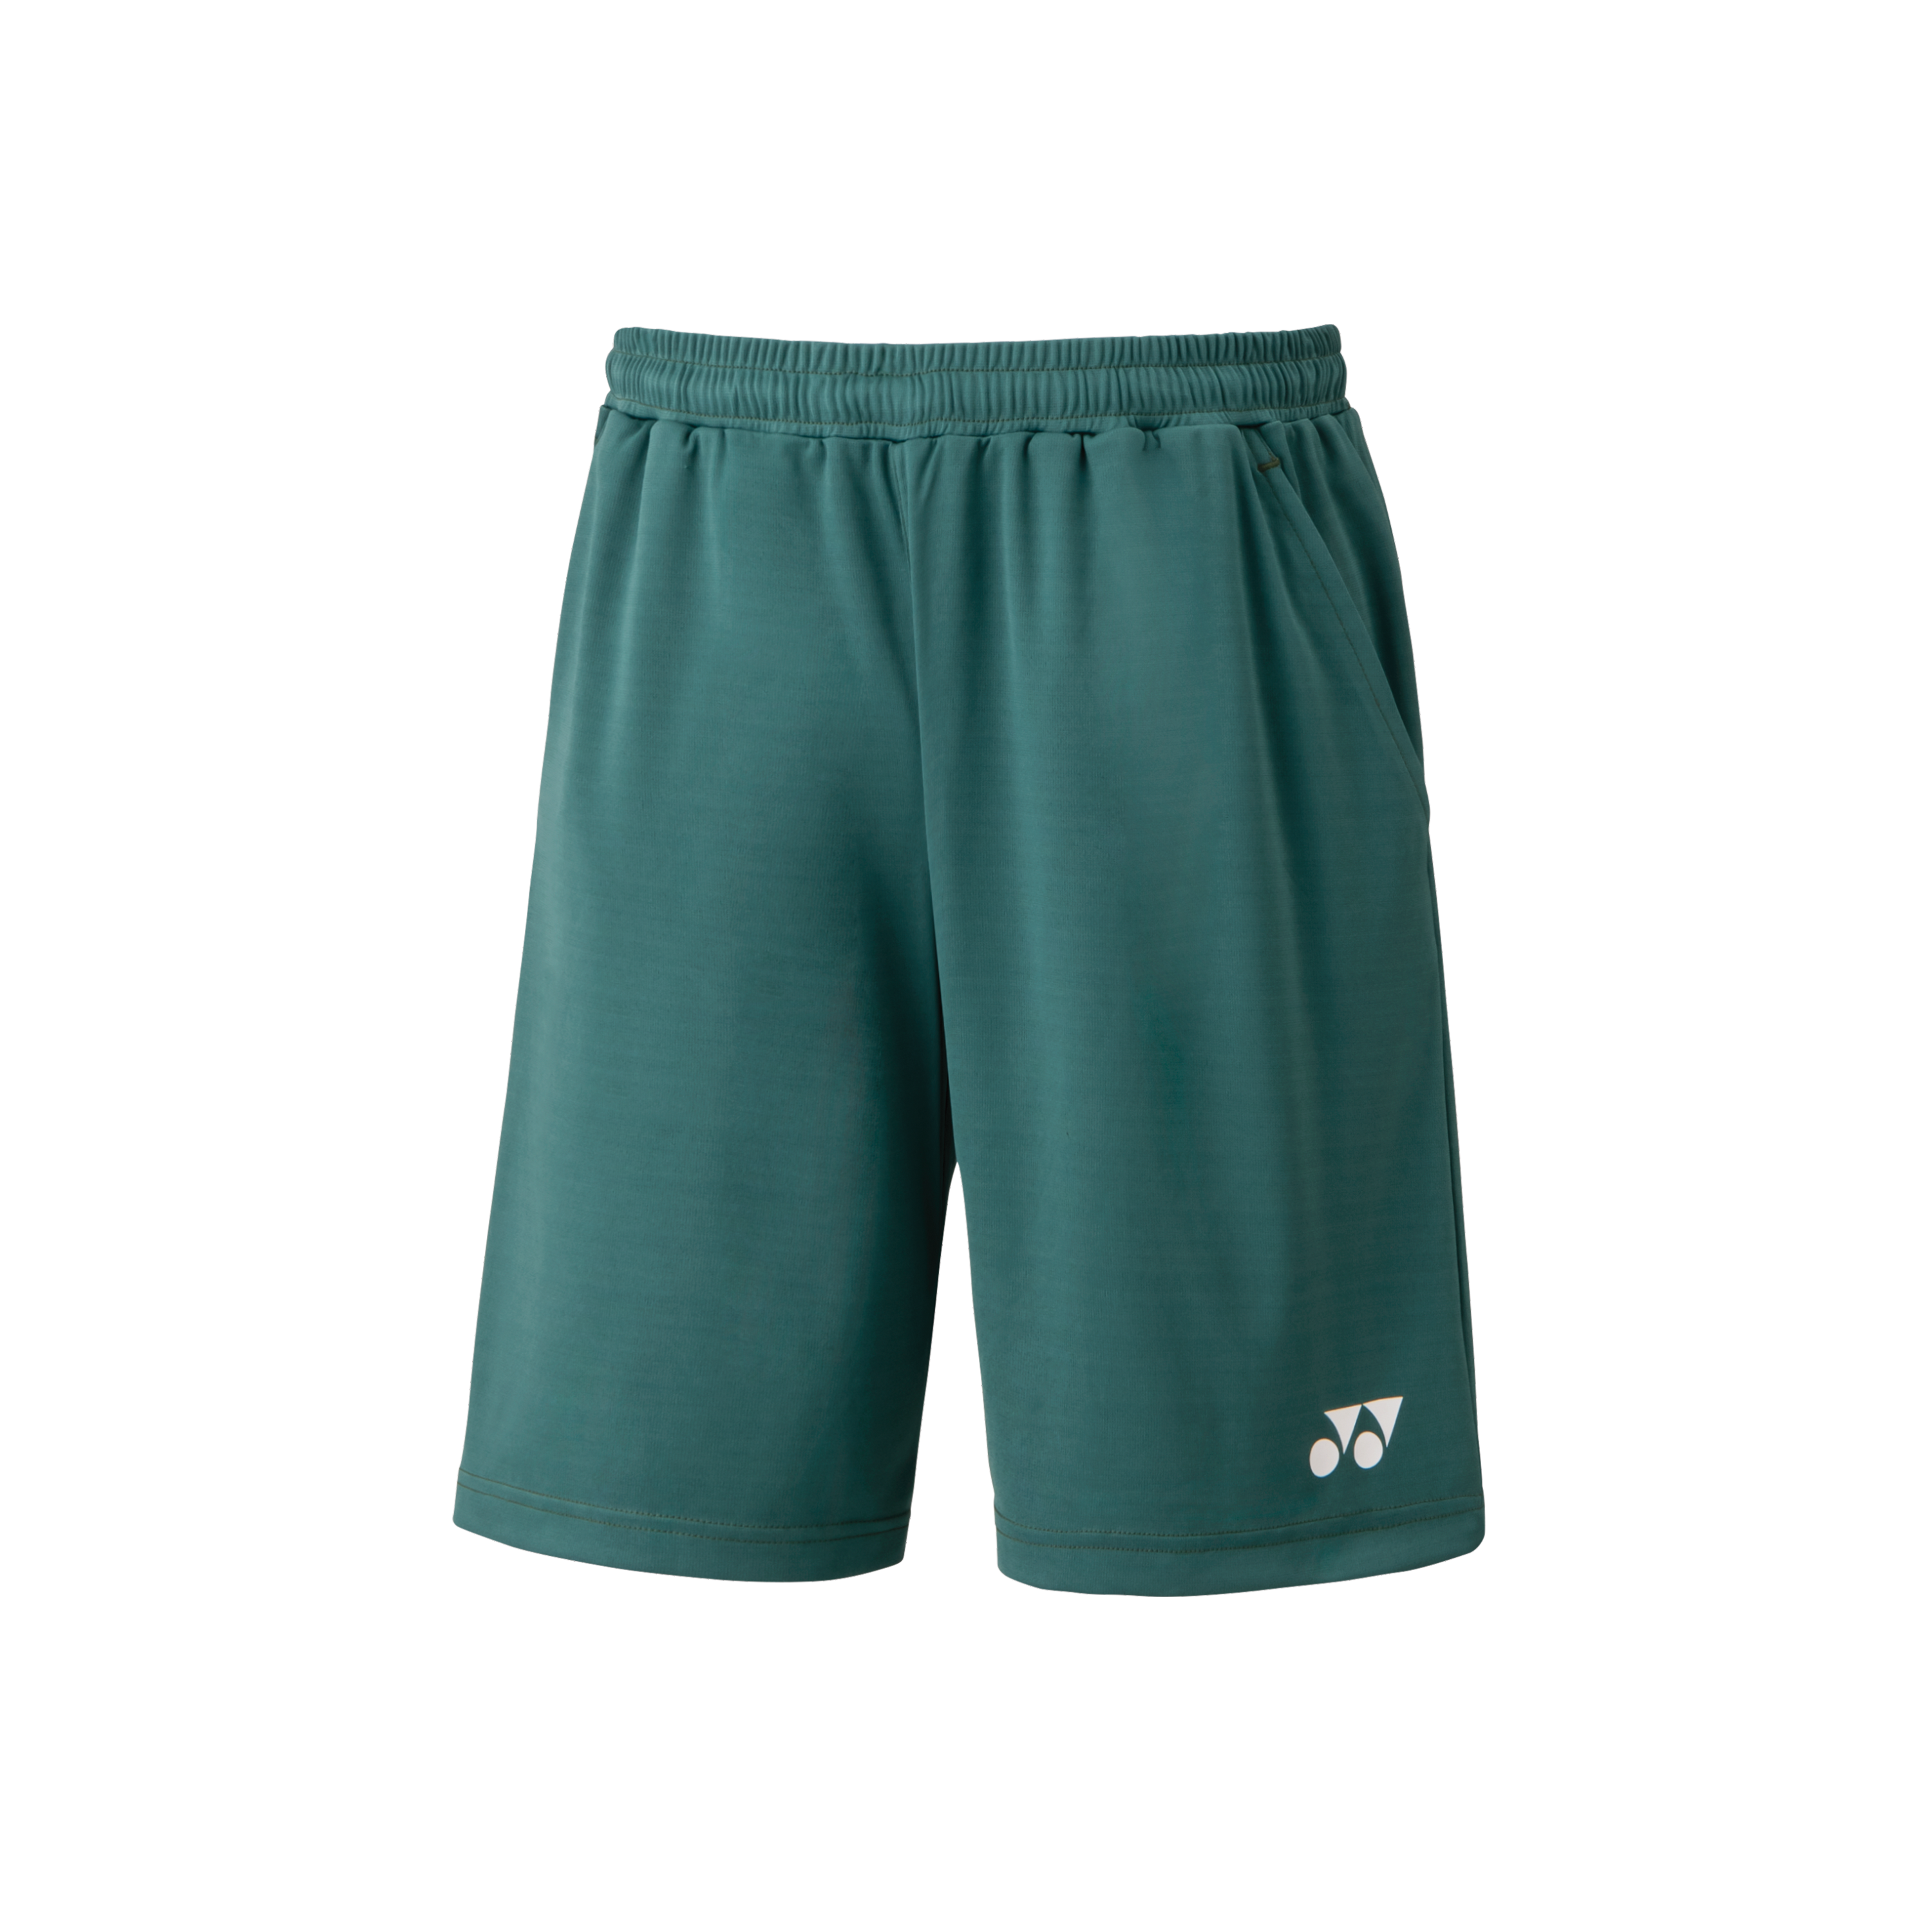 Yonex Sports Shorts YM0030 Antique Green MEN'S